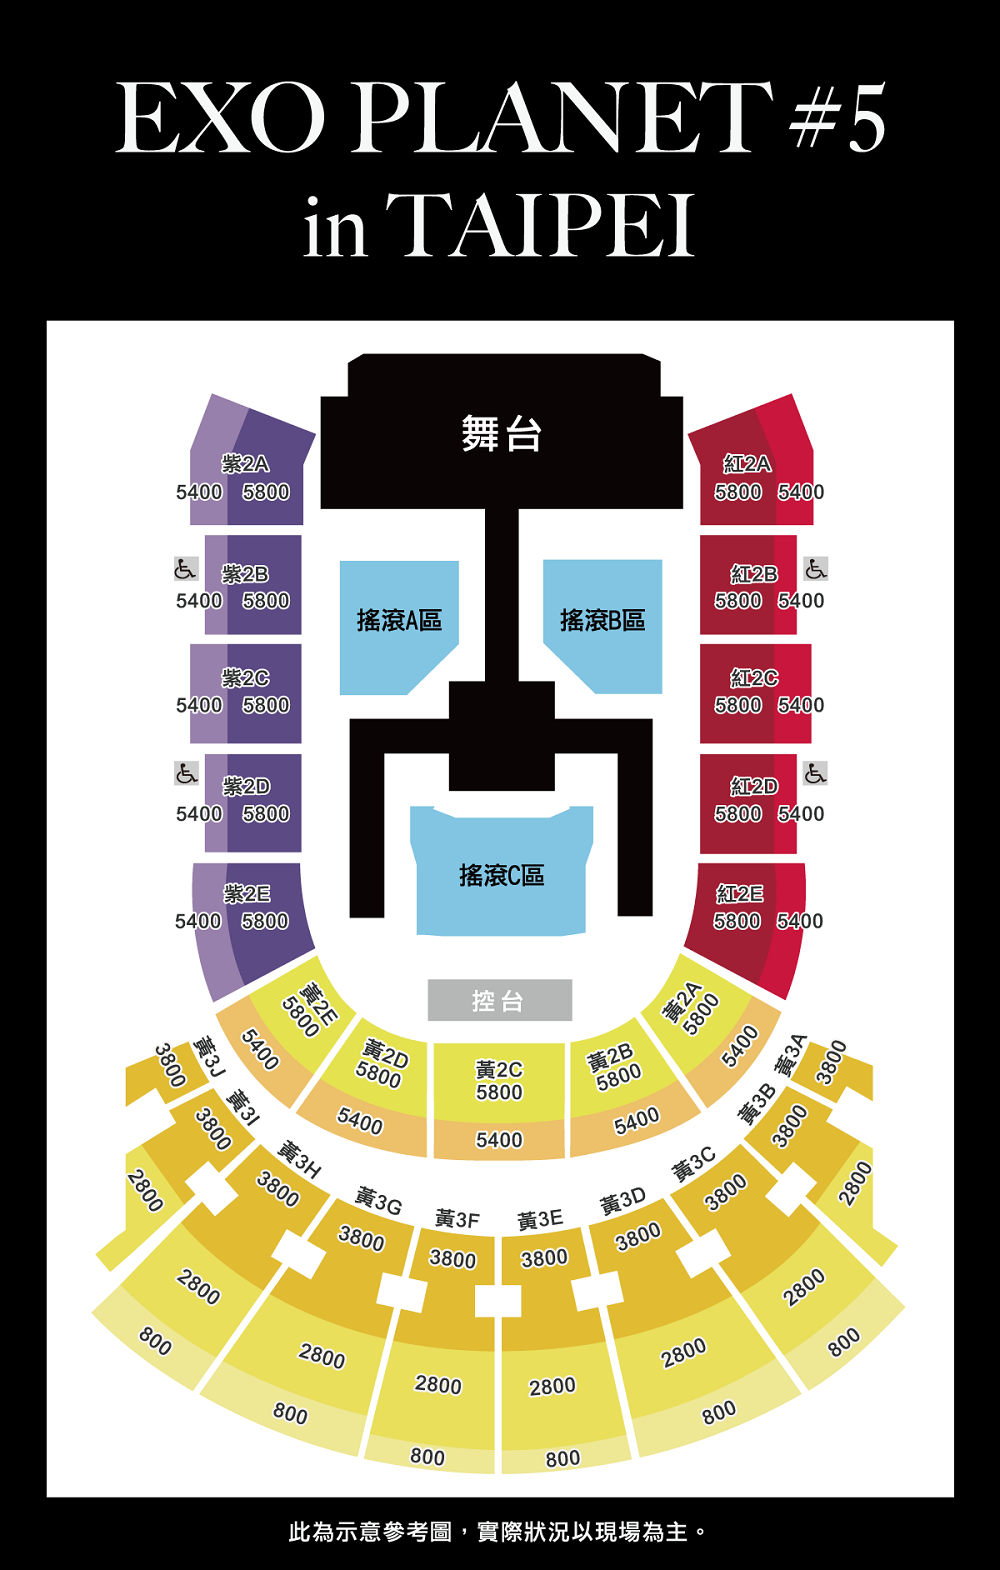 EXO 台北演唱會 2019 座位圖 Seating Plan